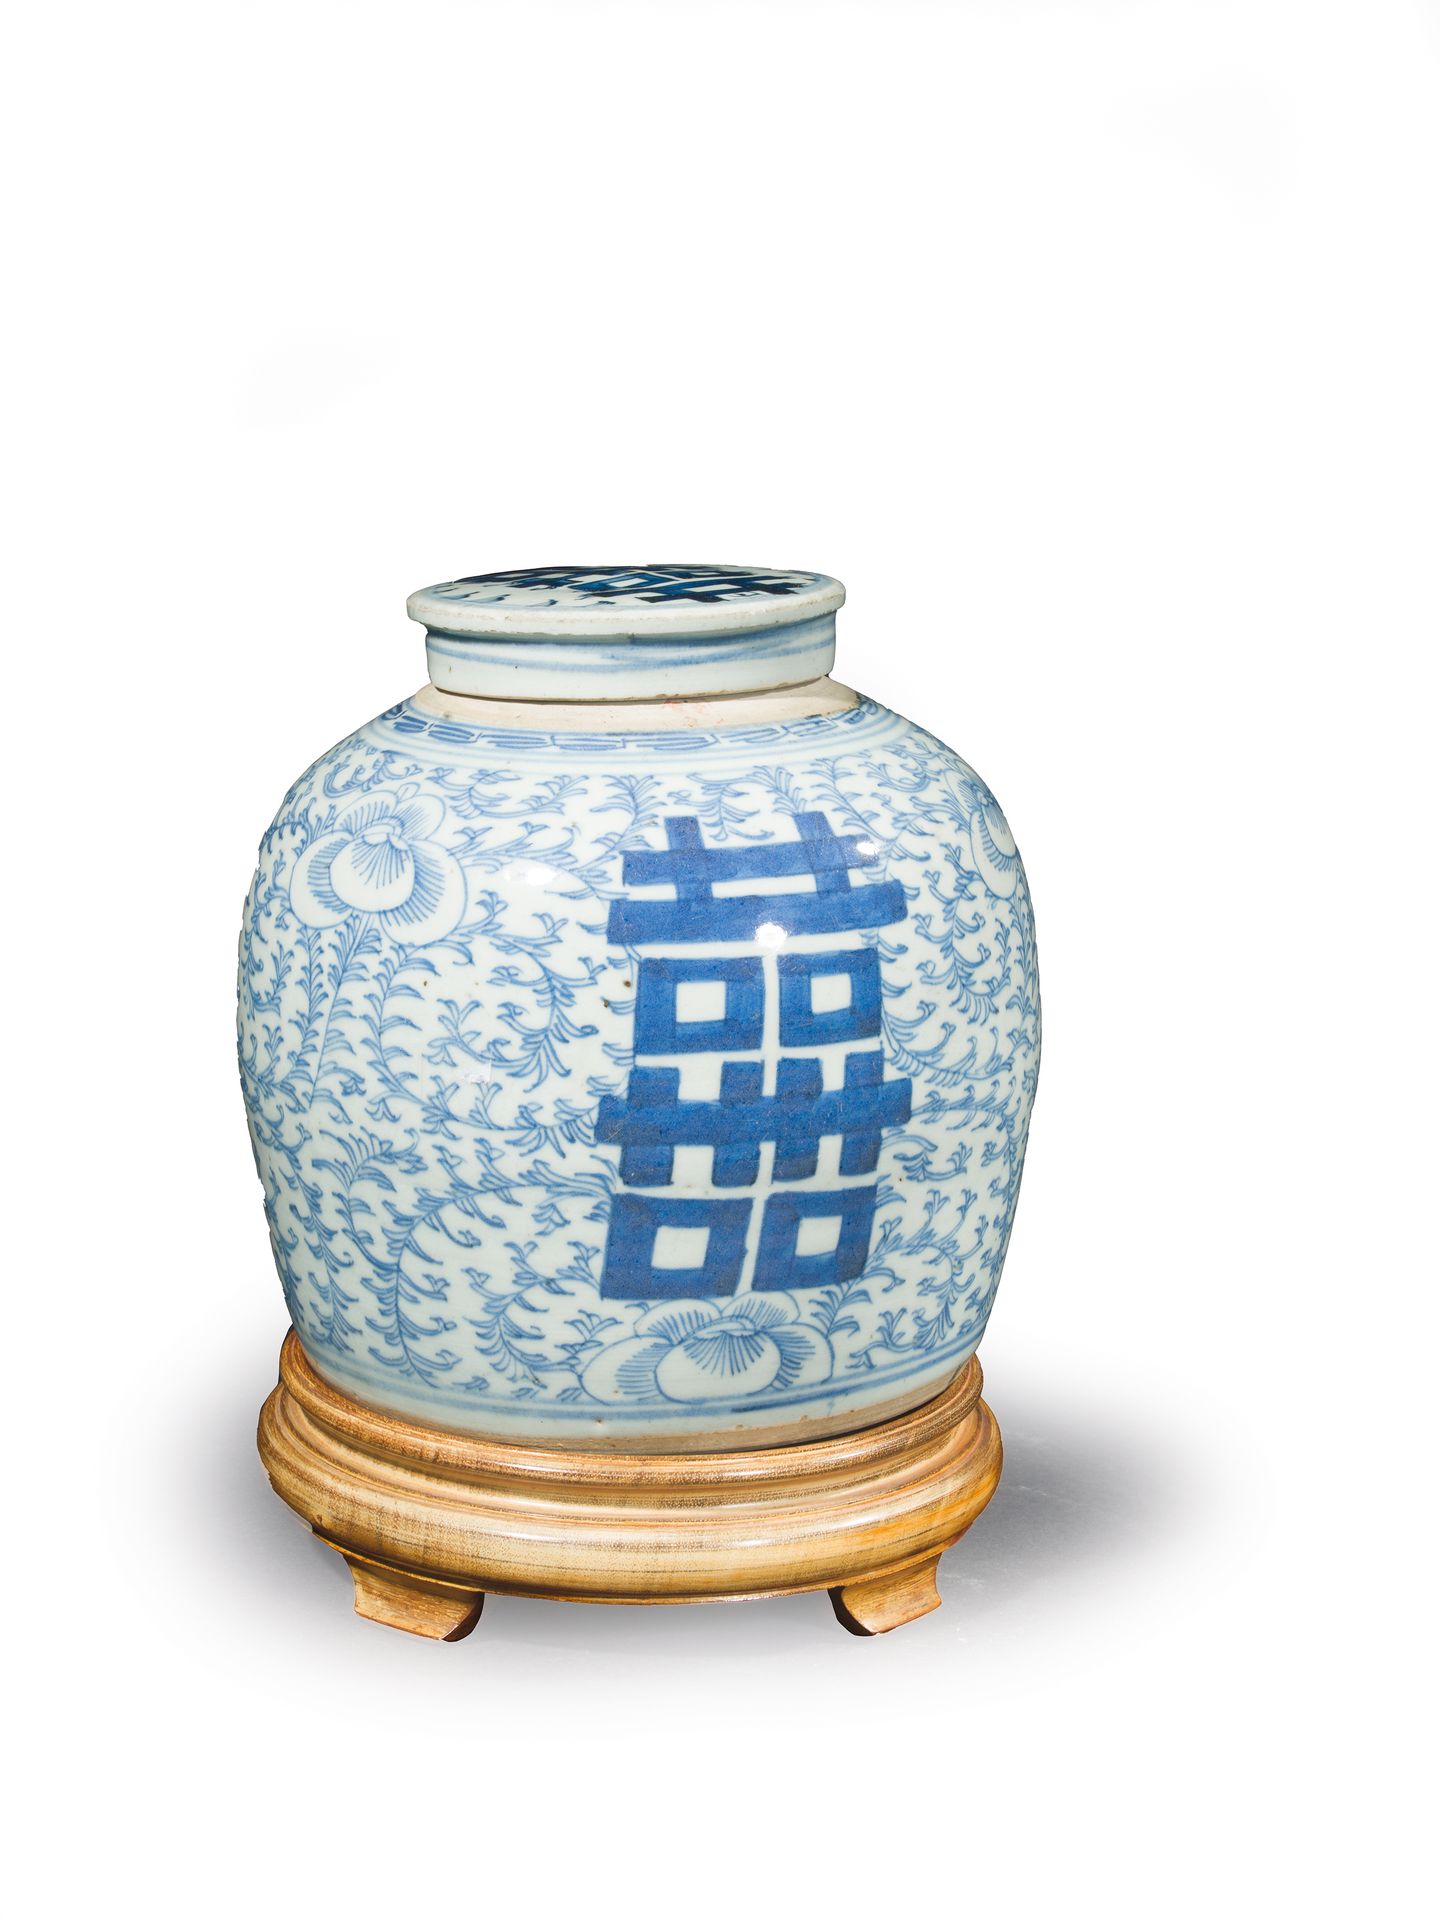 Null 
Vaso da zenzero in porcellana blu e bianca.

Cina 20° secolo

H. 26 cm